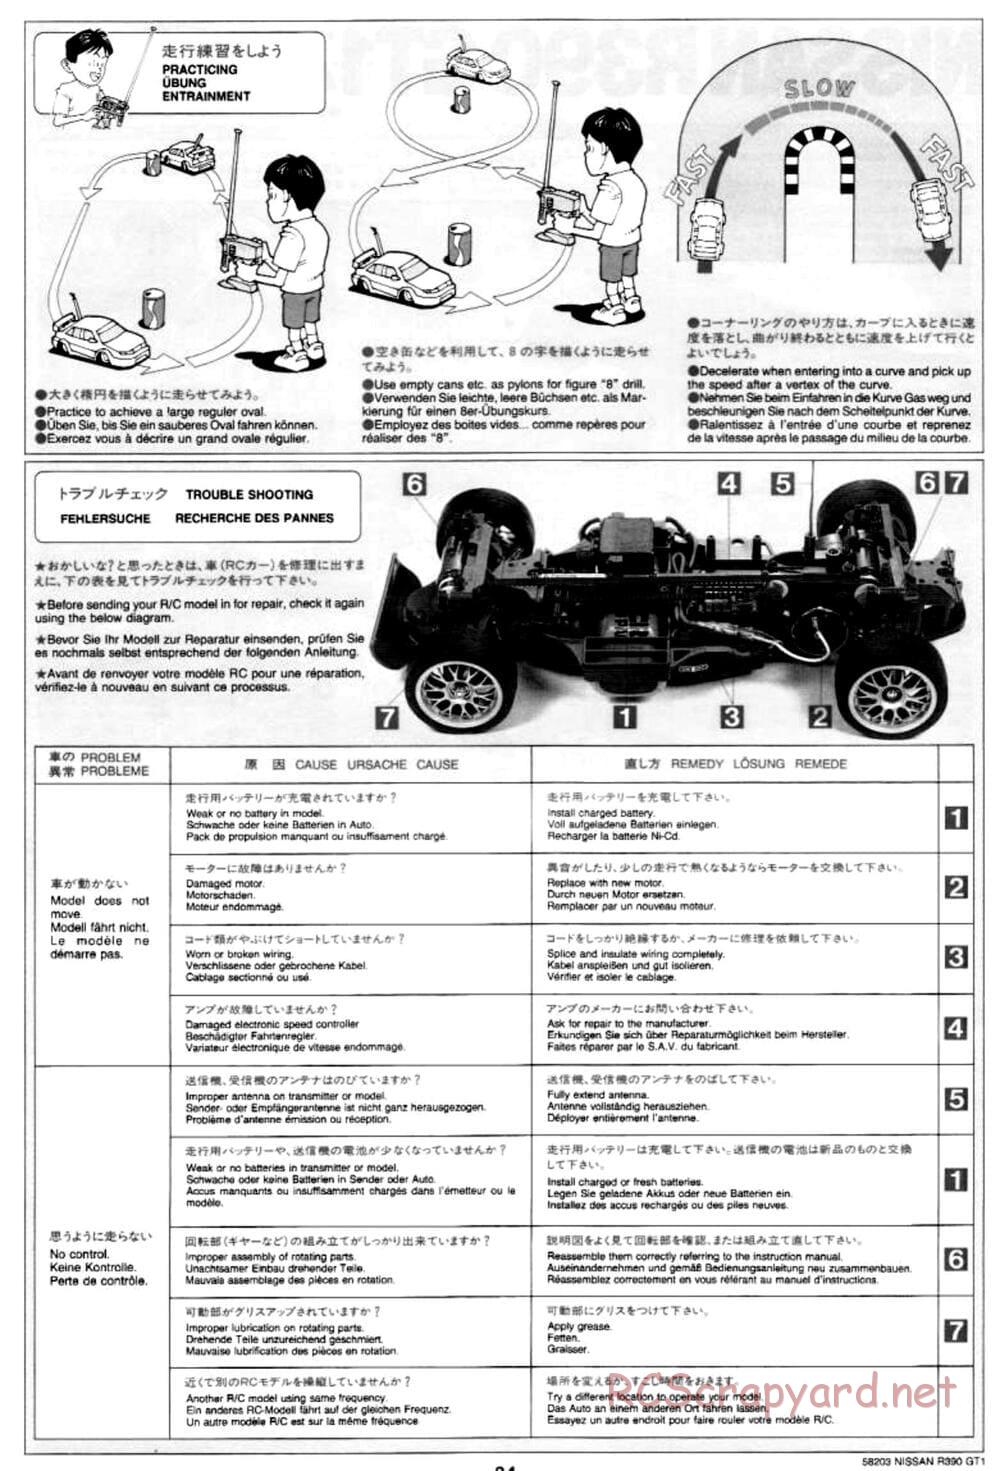 Tamiya - Nissan R390 GT1 - TA-03R Chassis - Manual - Page 24